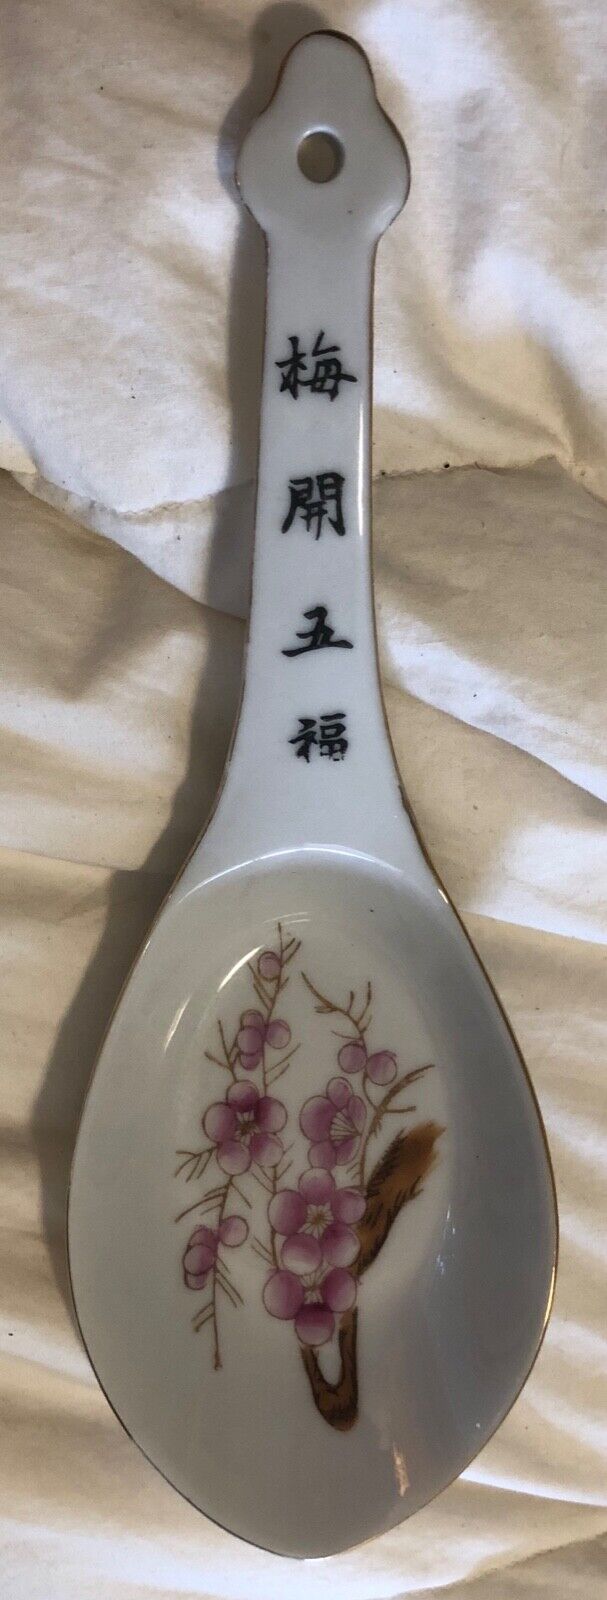 Japan Apple Blossom Gold Trim Spoon Rest Porcelain Pink Decor Kitchen